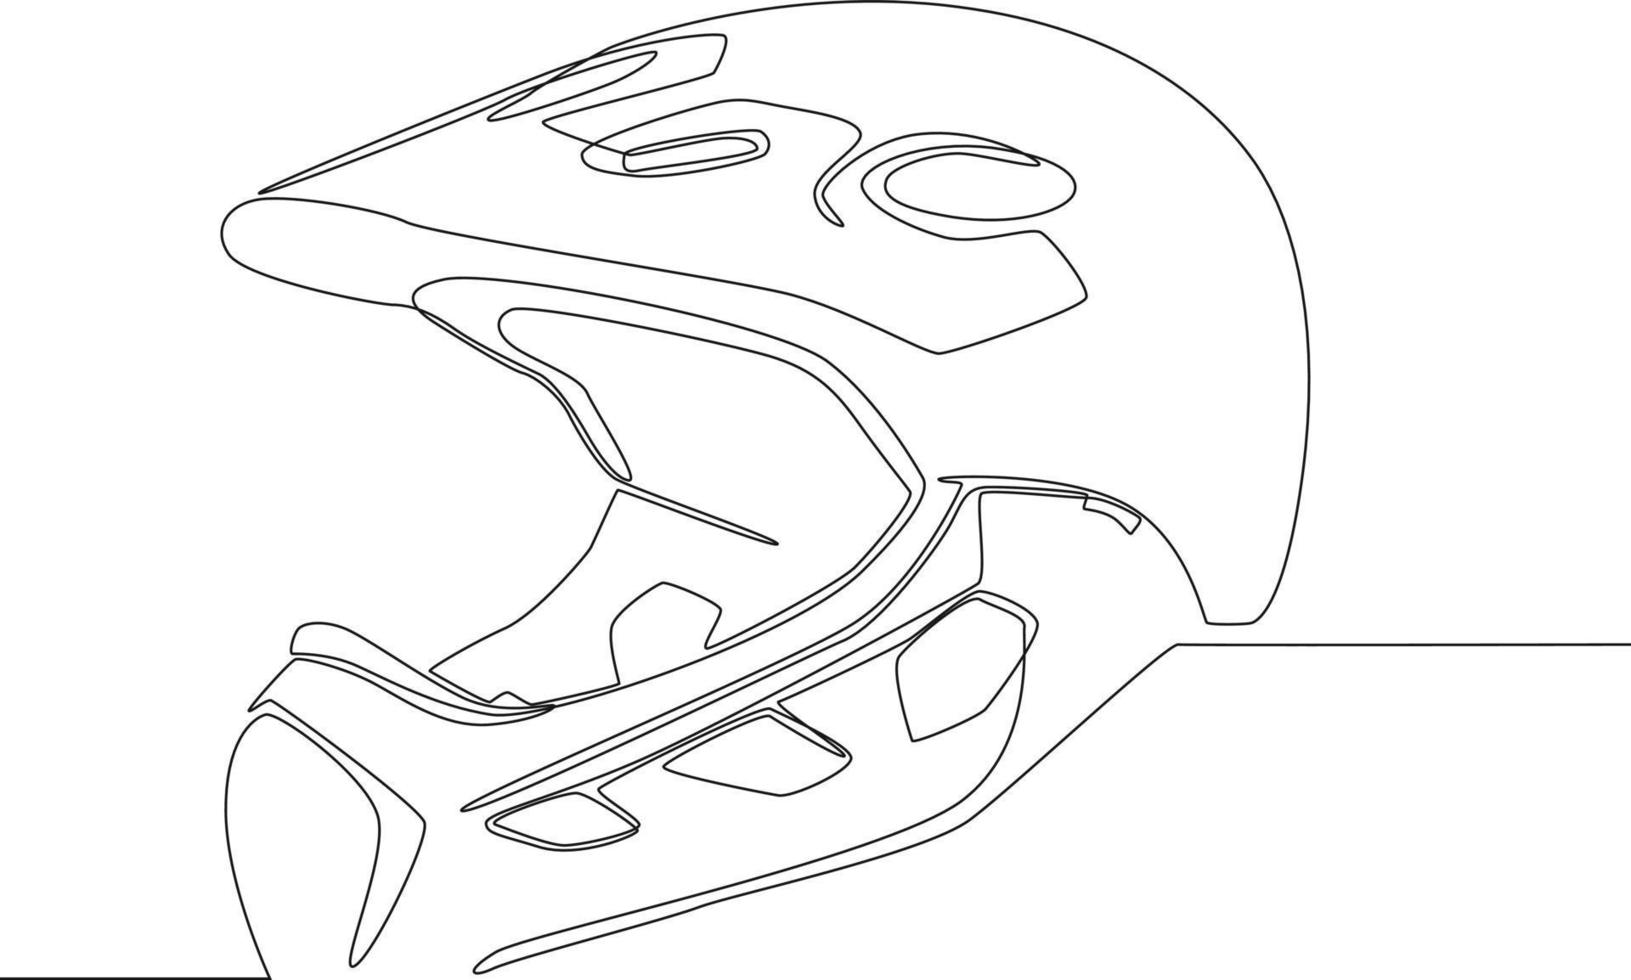 casco de motocicleta de dibujo de línea continua simple. ilustración vectorial vector